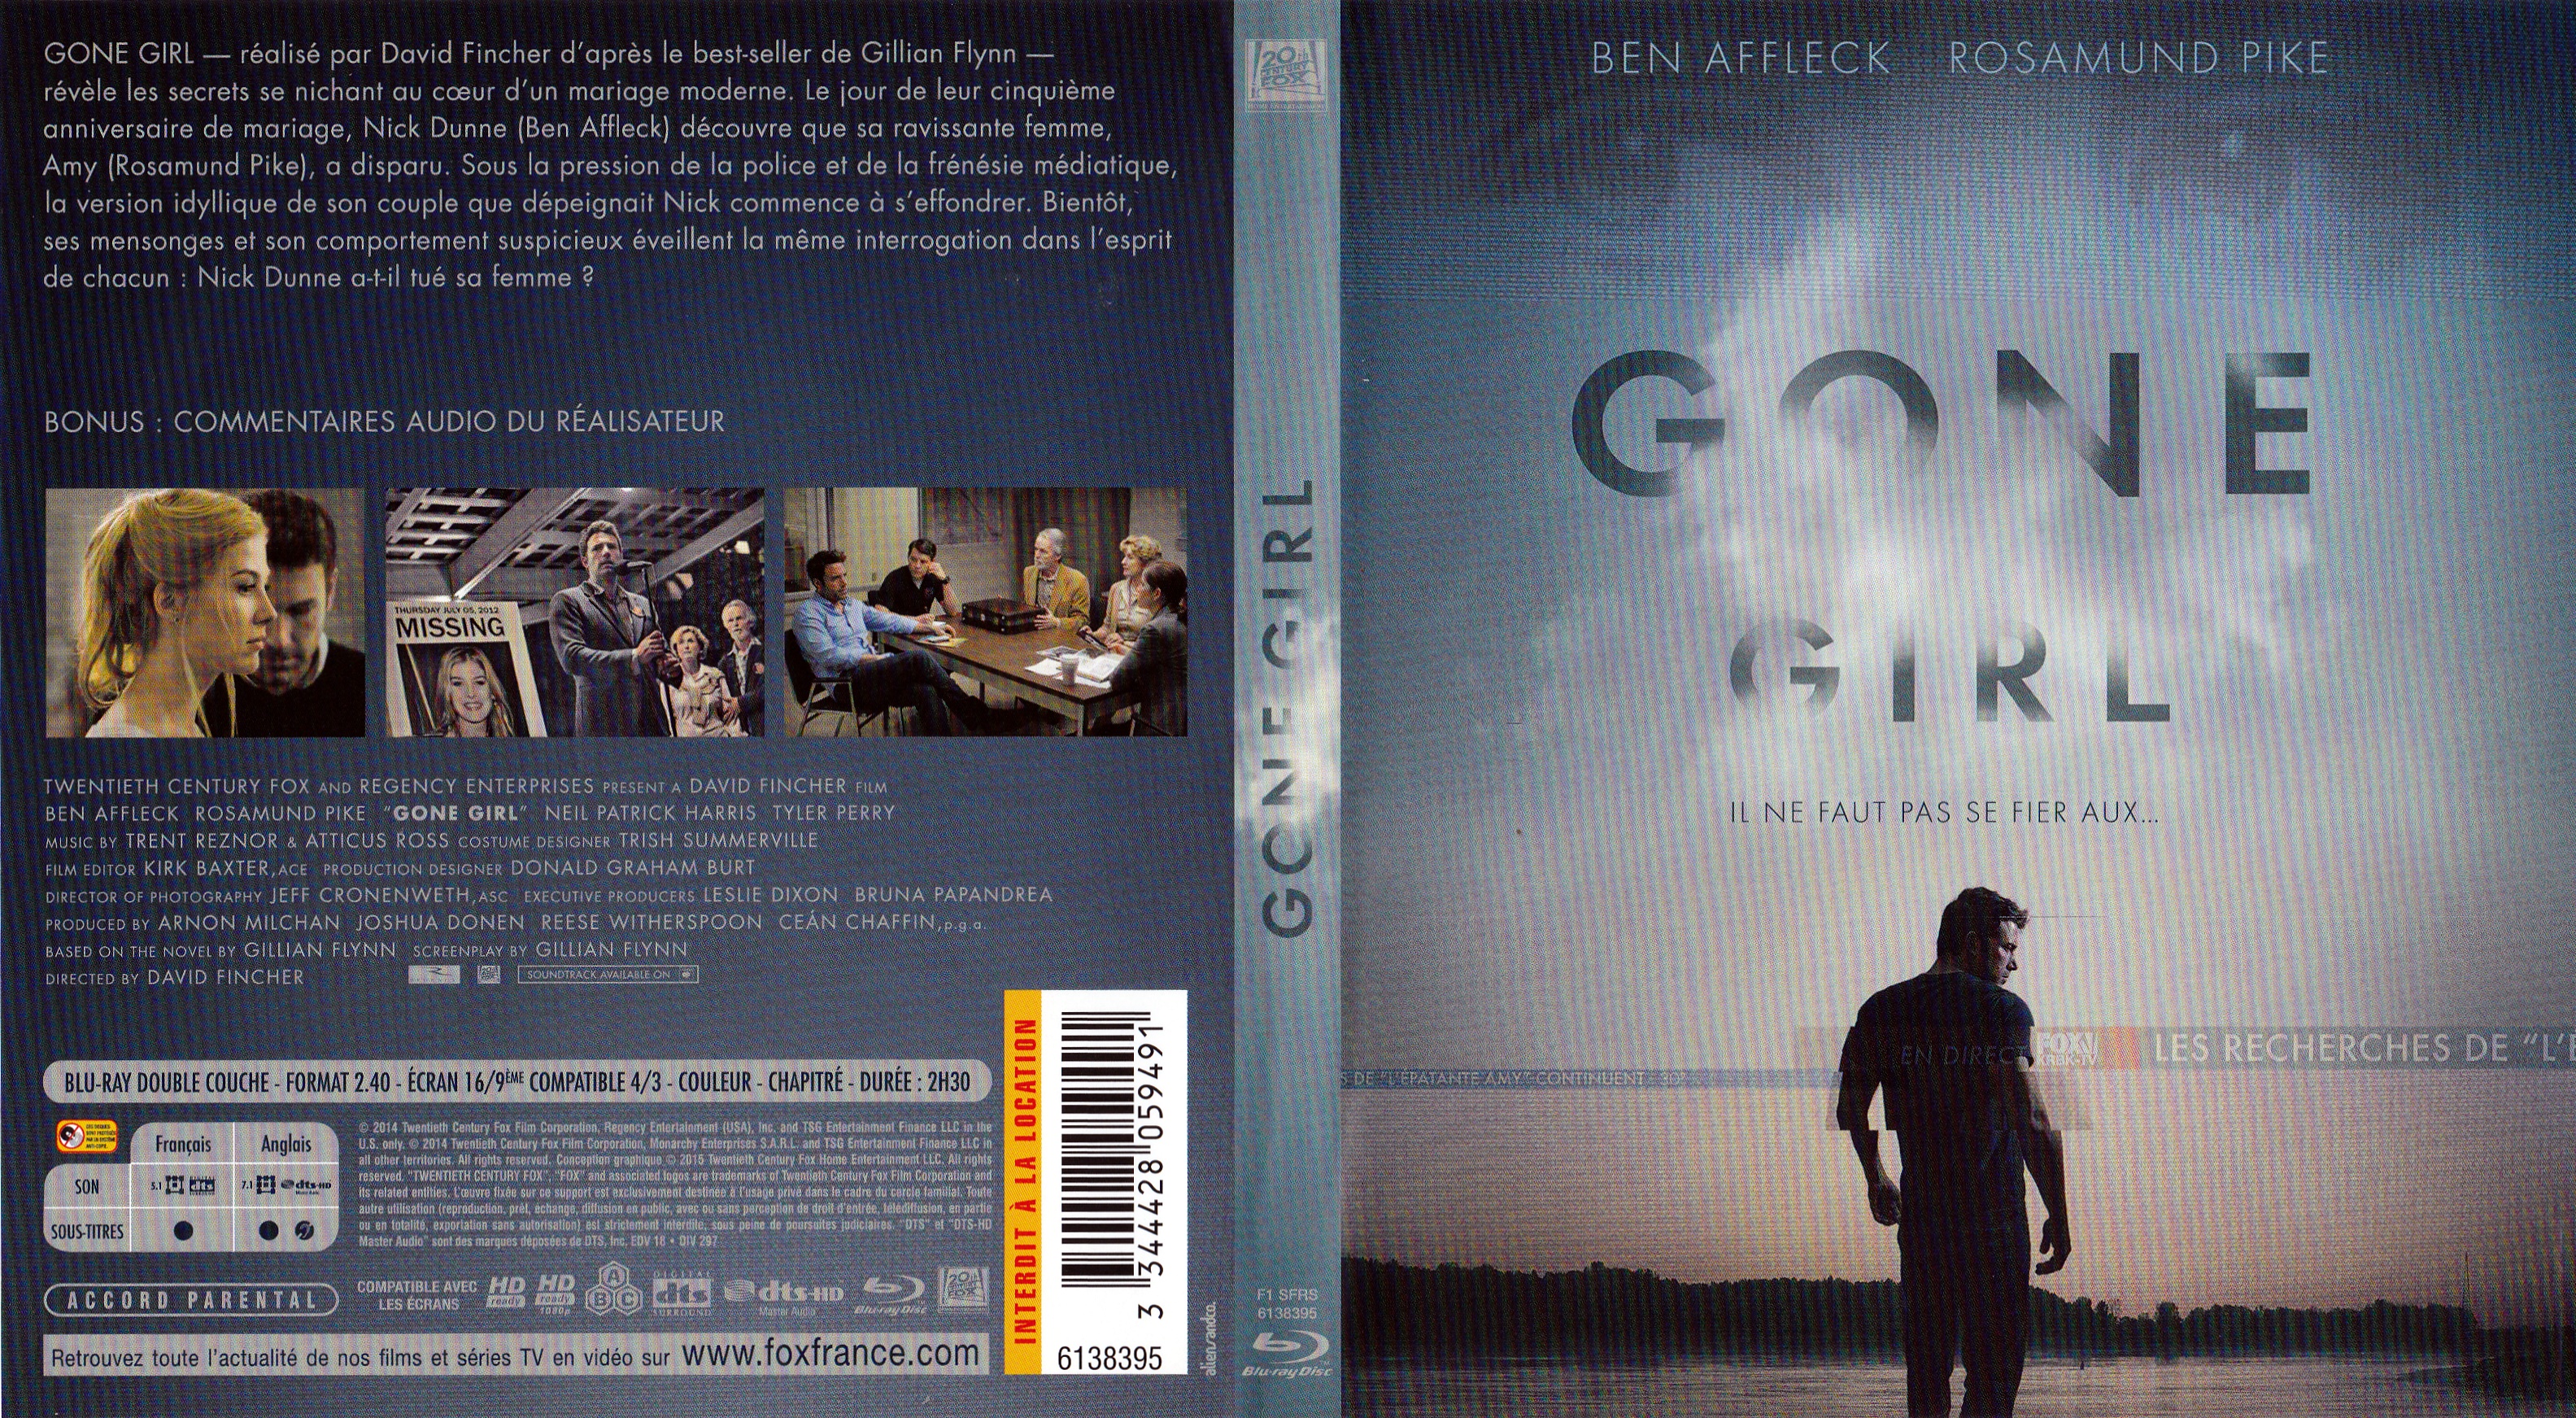 Jaquette DVD Gone girl (BLU-RAY) v2